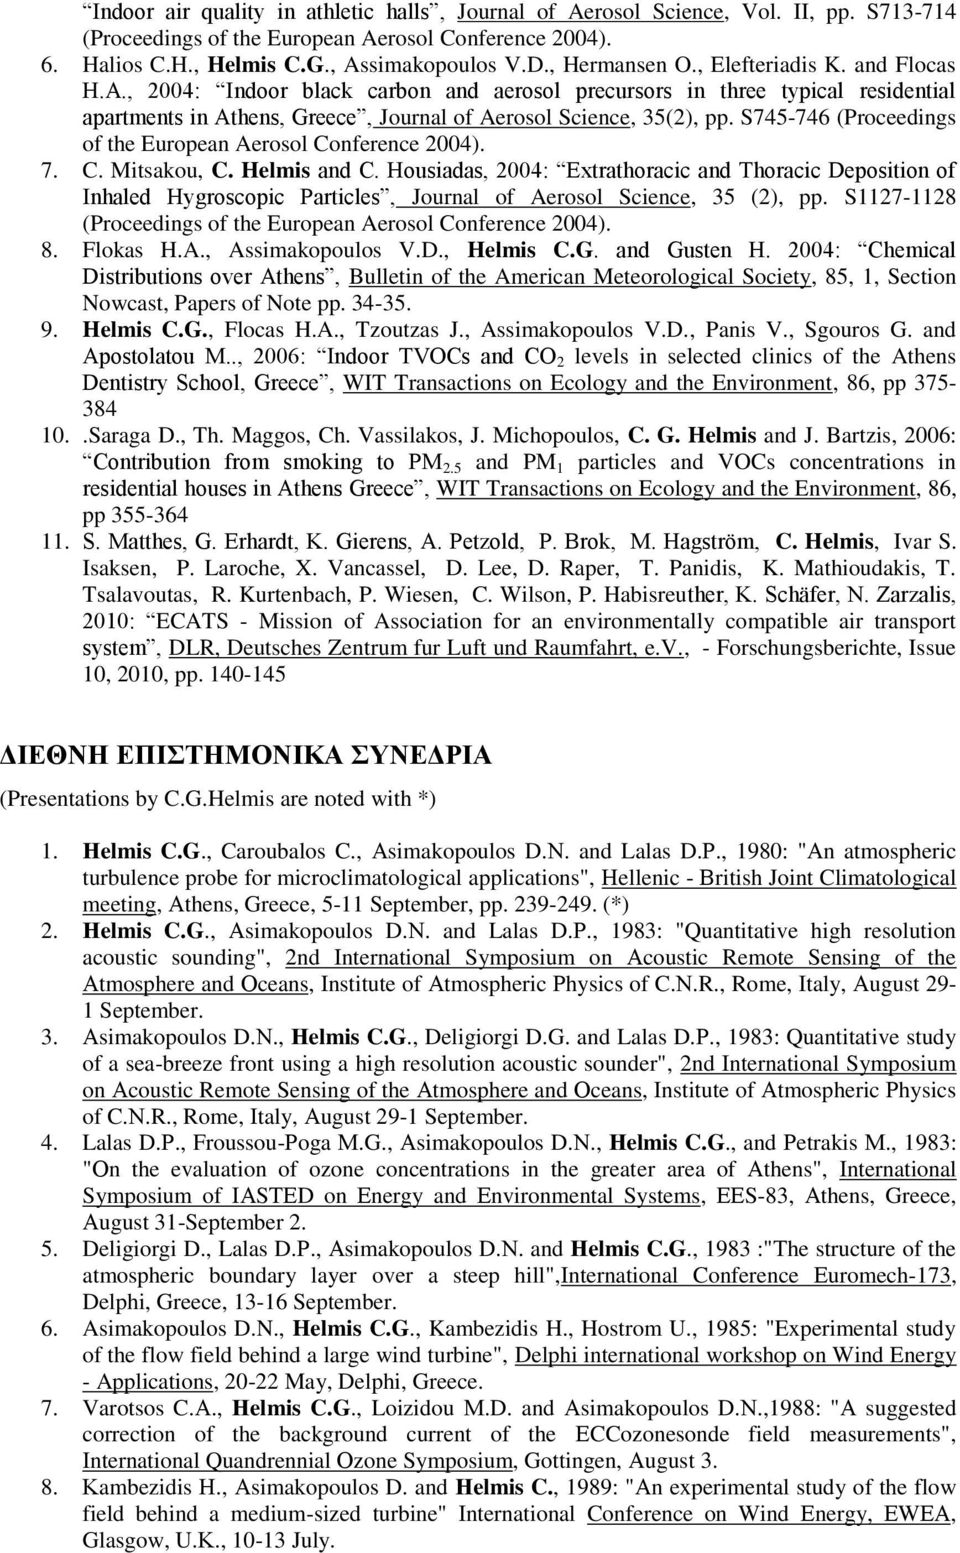 S745-746 (Proceedings of the European Aerosol Conference 2004). 7. C. Mitsakou, C. Helmis and C.